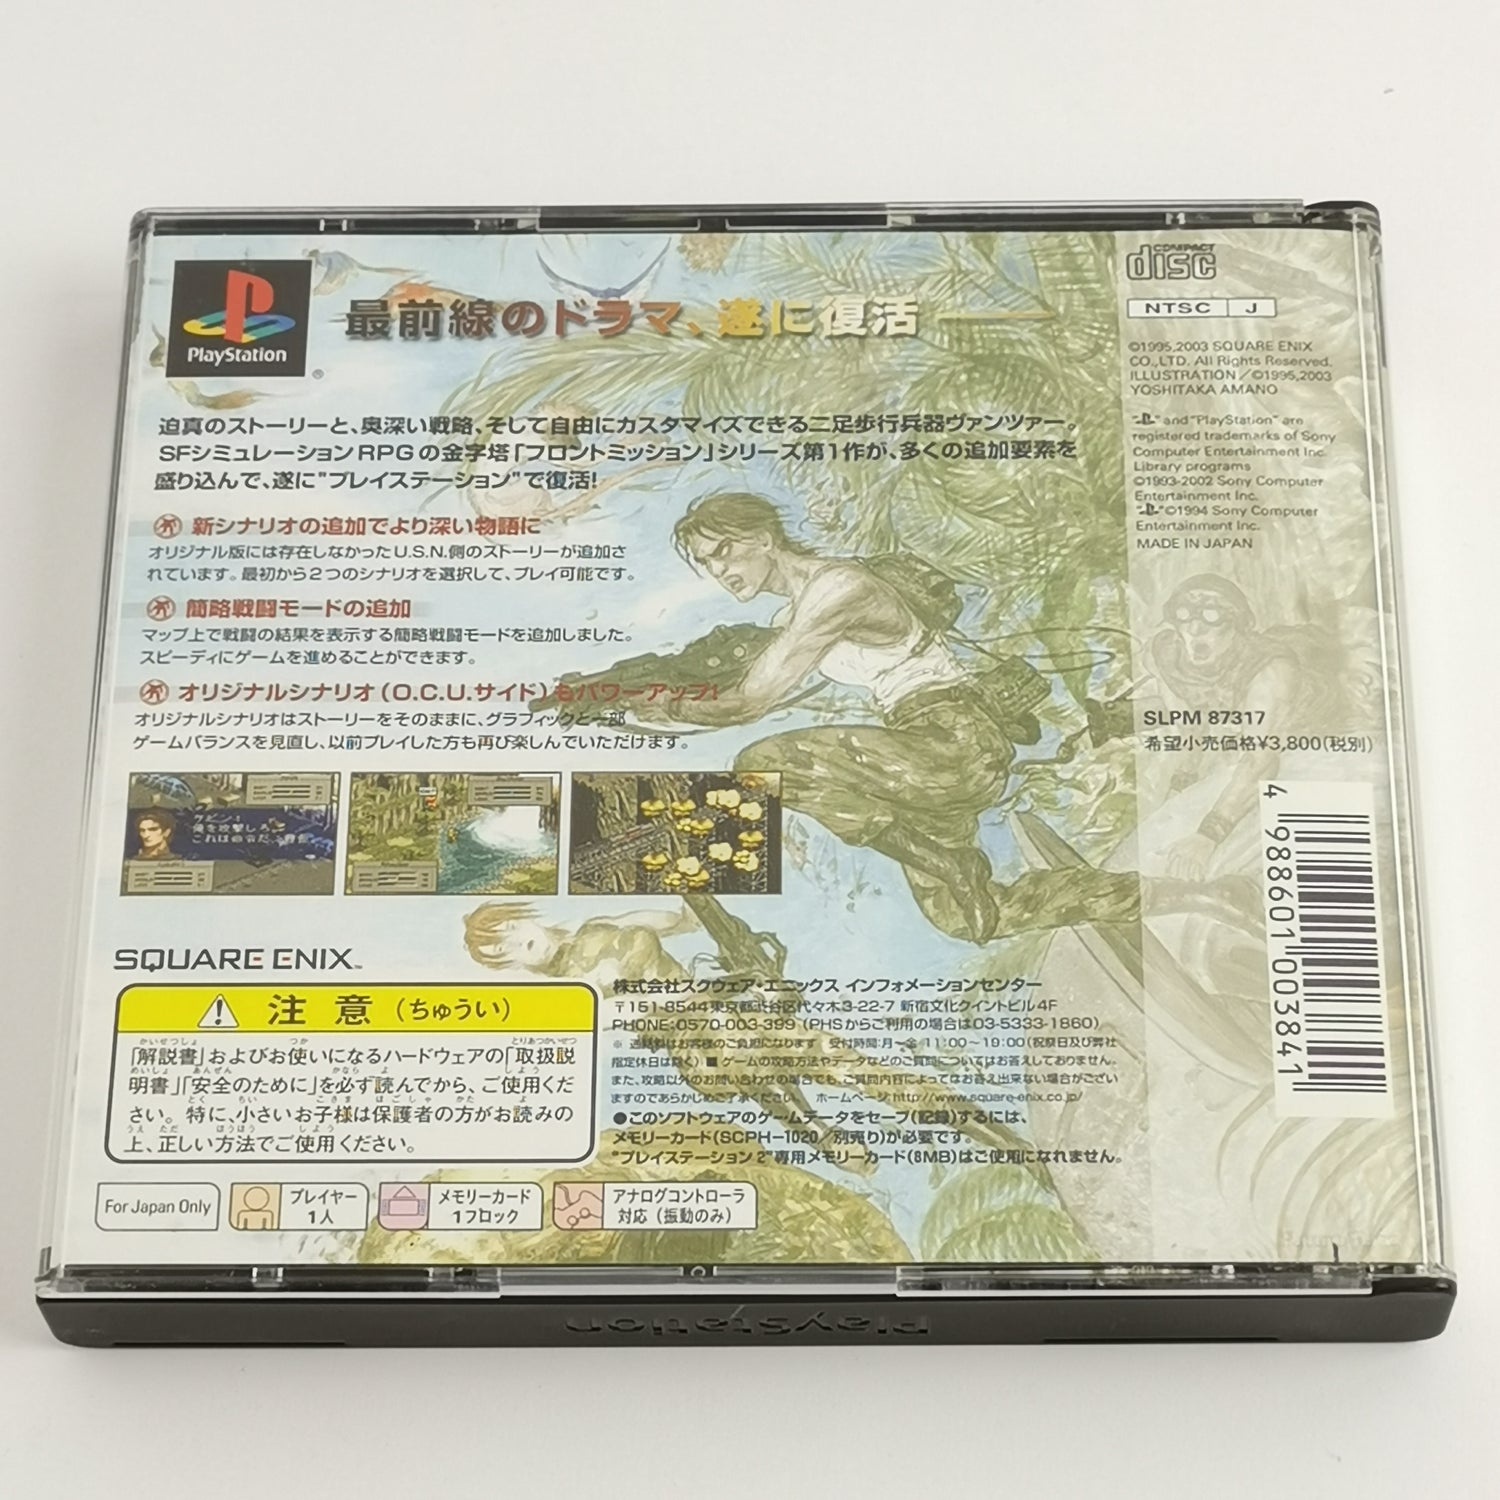 Sony Playstation 1 Spiel : Front Mission 1ST - Square Enix| PS1 OVP NTSC-J JAPAN